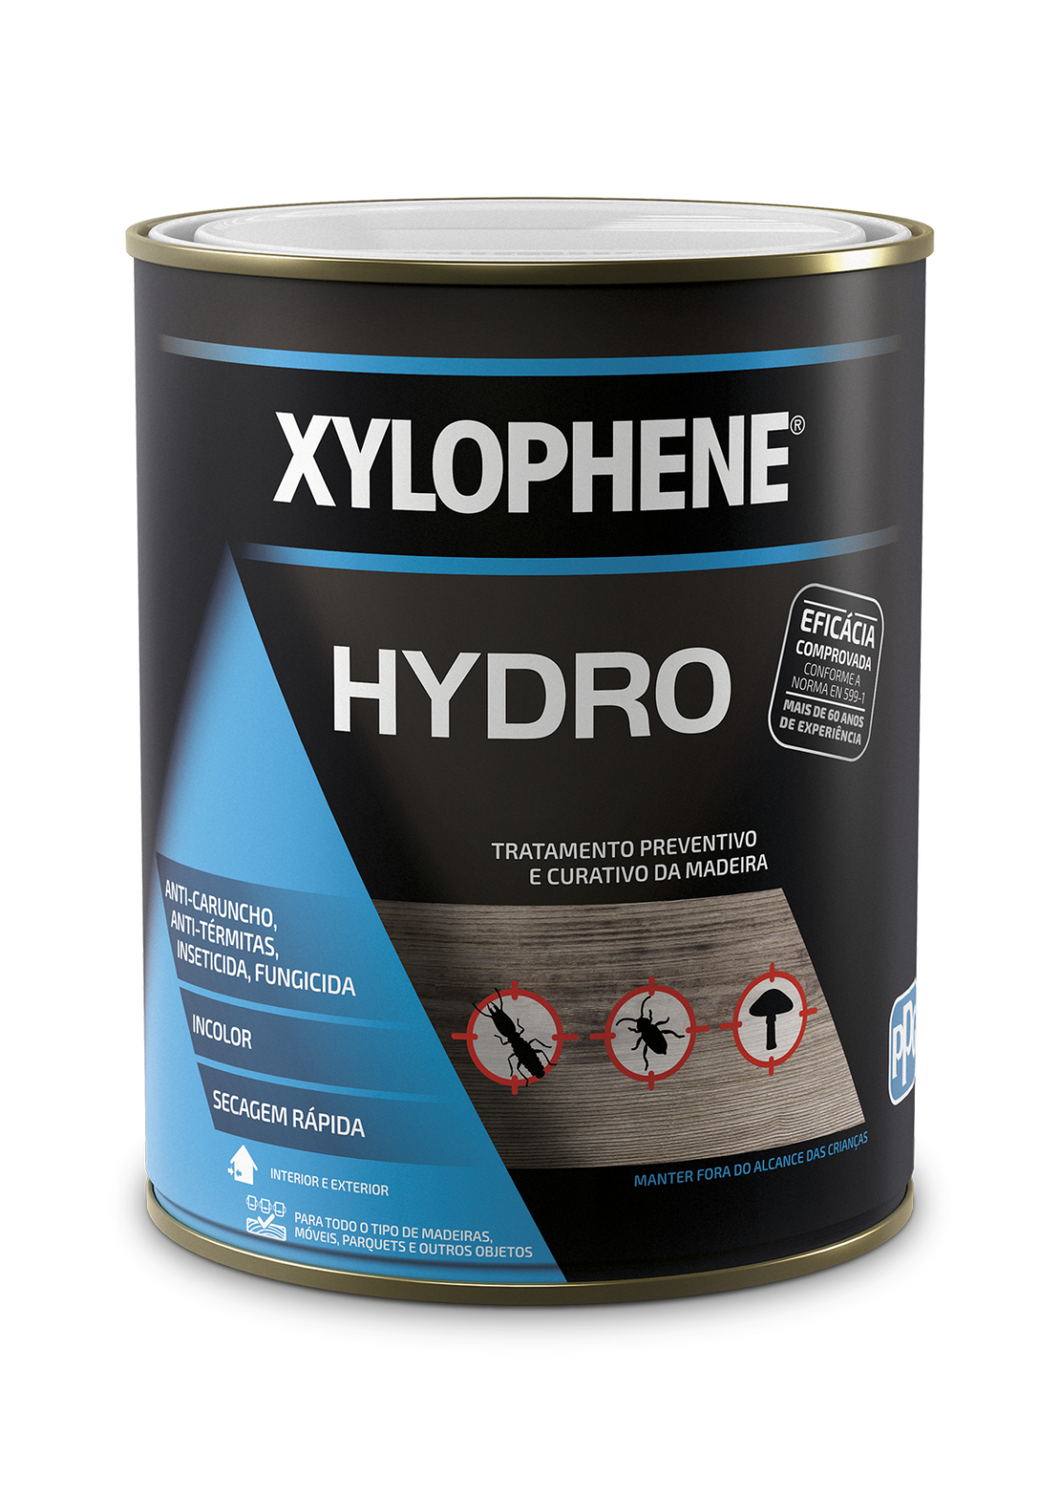 Xylophene Hydro